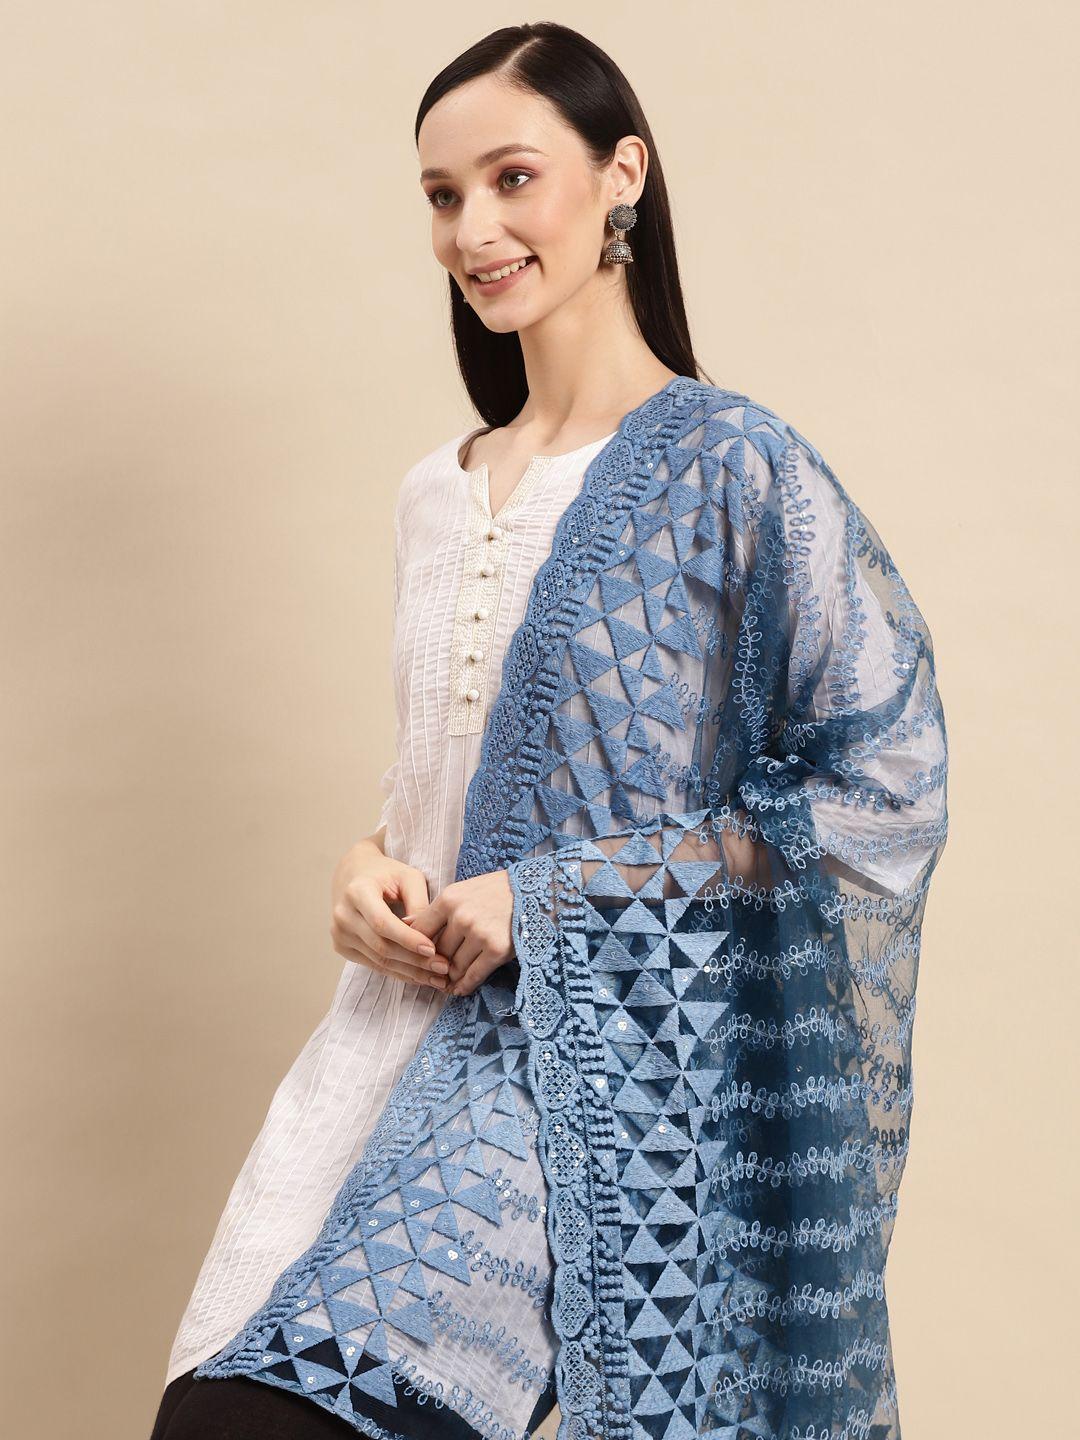 saadgi teal blue & silver-coloured ethnic motifs embroidered chikankari sequin dupatta